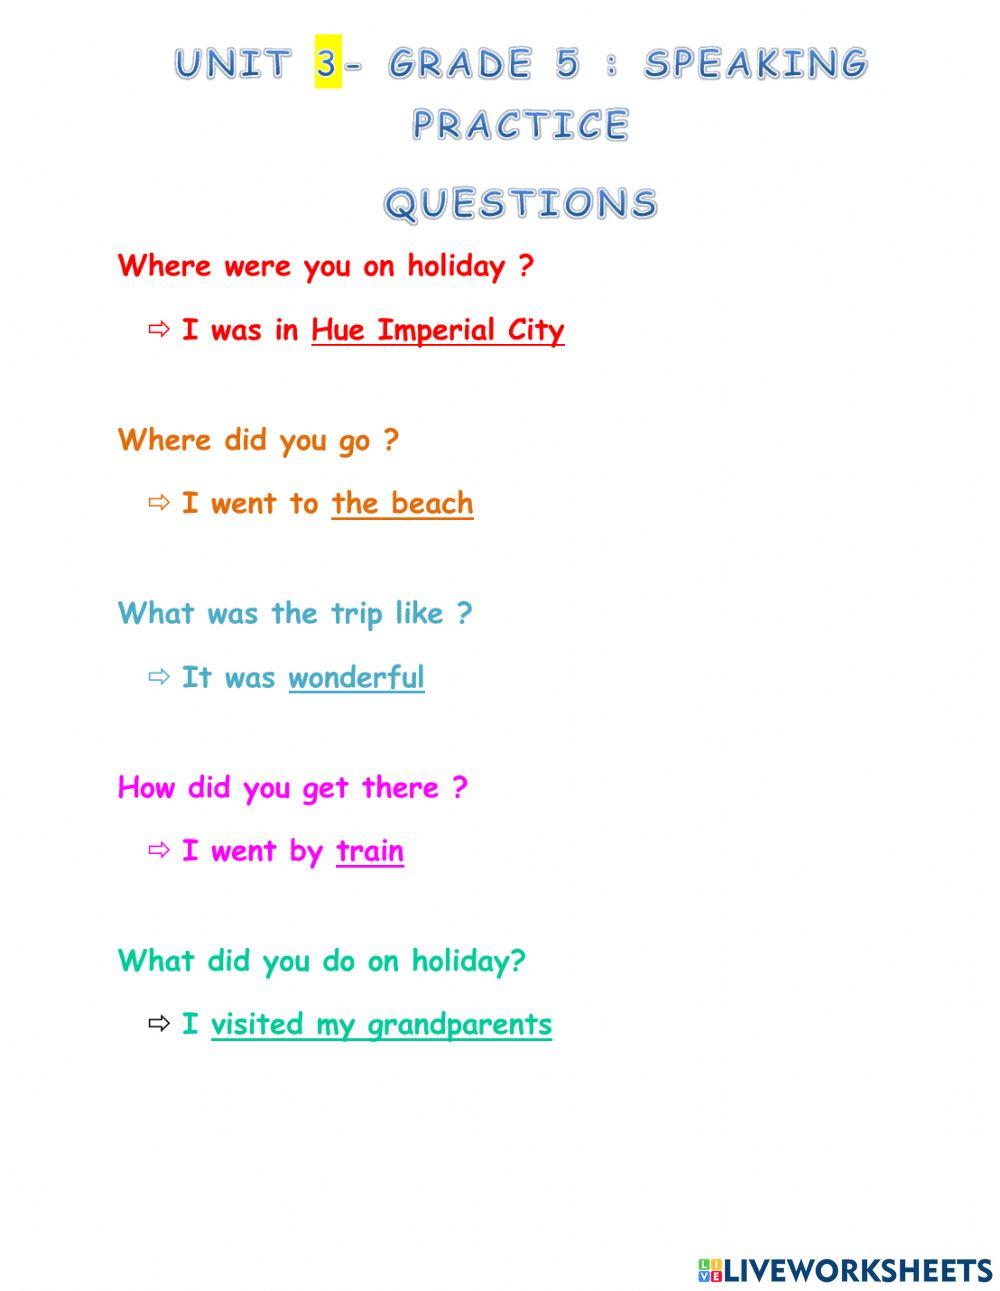 Unit 3 - grade 5 speaking questions